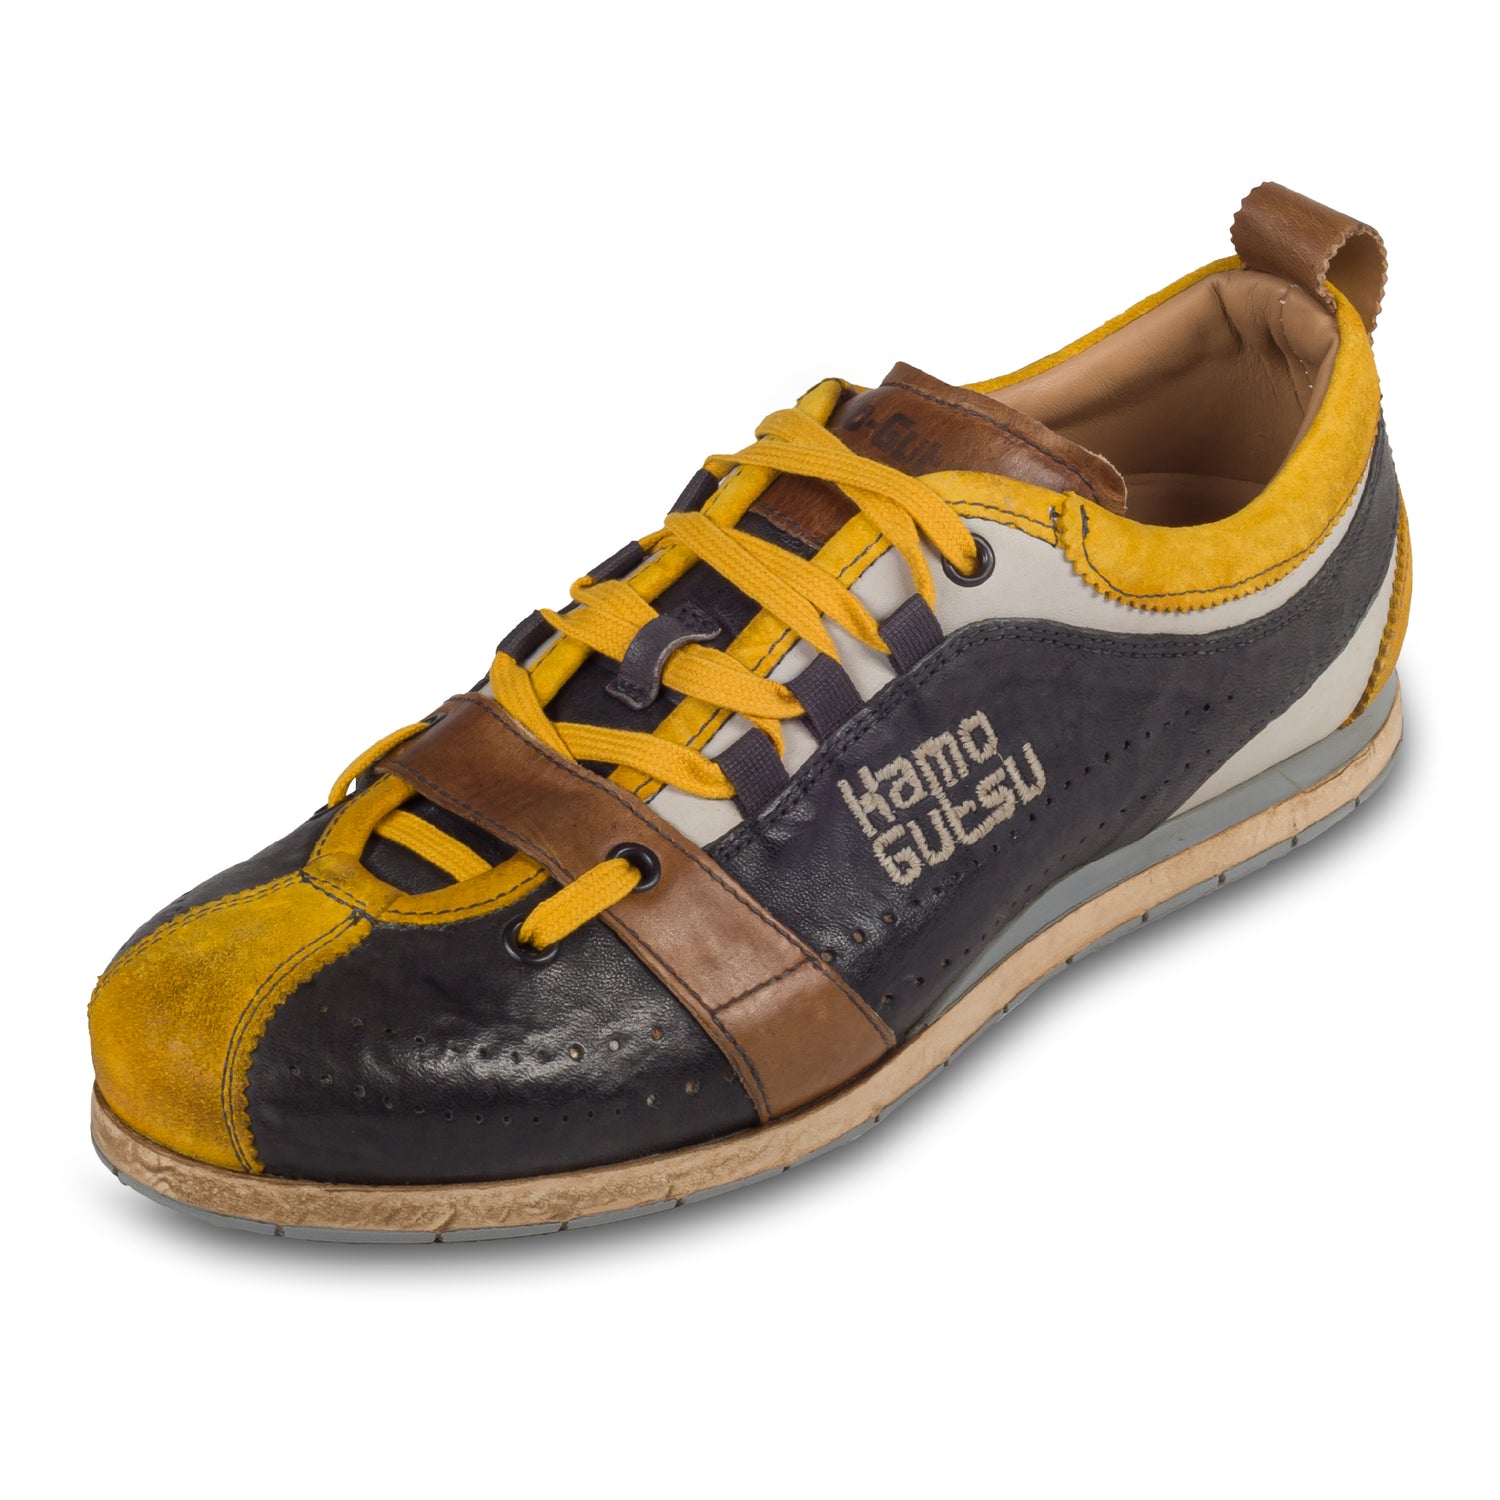 KAMO-GUTSU Italienischer Herren Leder Sneaker, dunkelgrau gelb, Retro-Optik, Modell TIFO-017 lambo antracite. Handgefertigt. Schräge Ansicht linker Schuh.